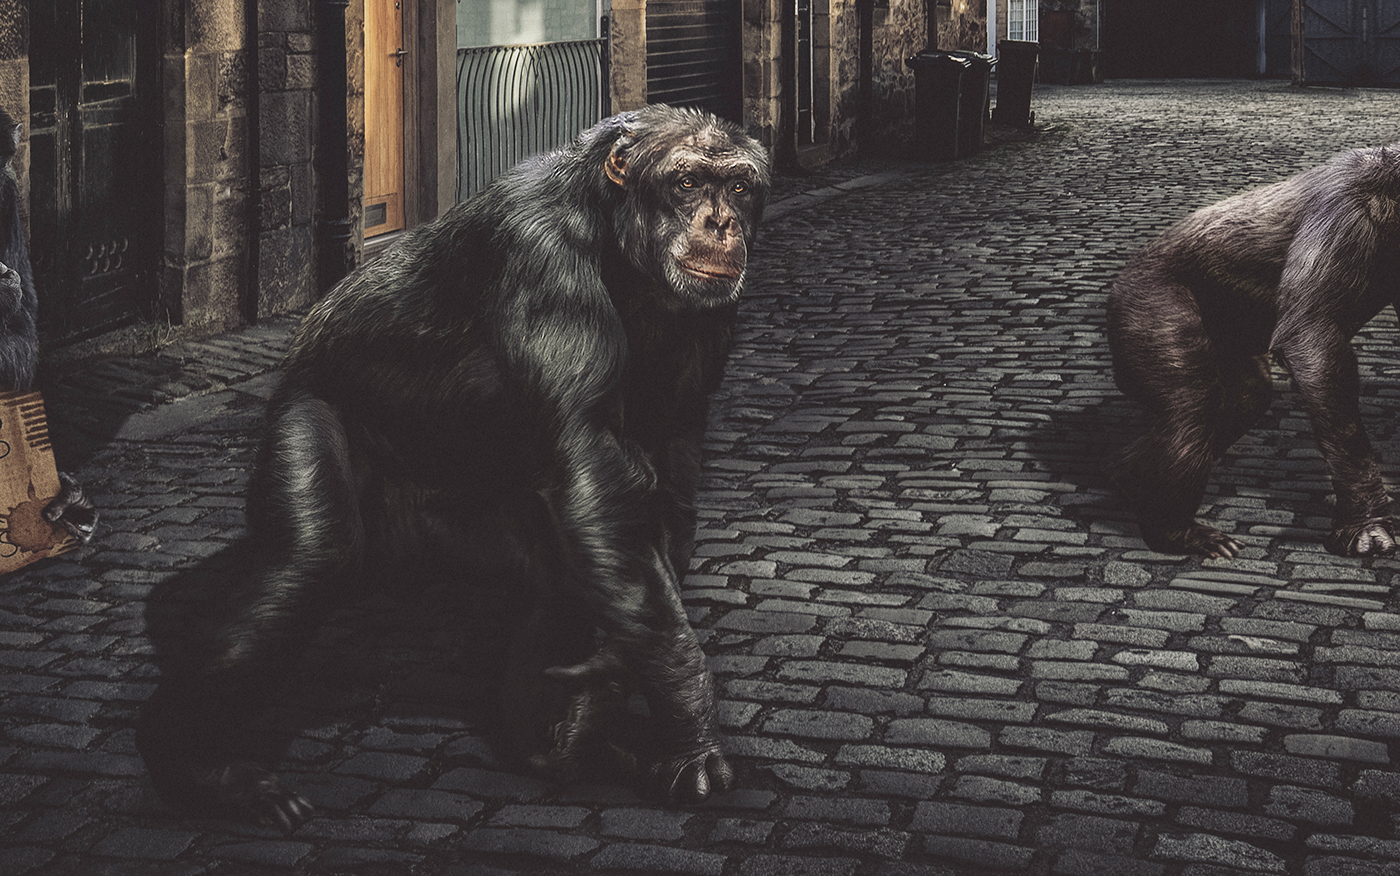 wild animals Chimps endangered homeless wildlife Lee Høwell city monkey charity environment Composite Adobe Photoshop zoo Edinburgh Zoo